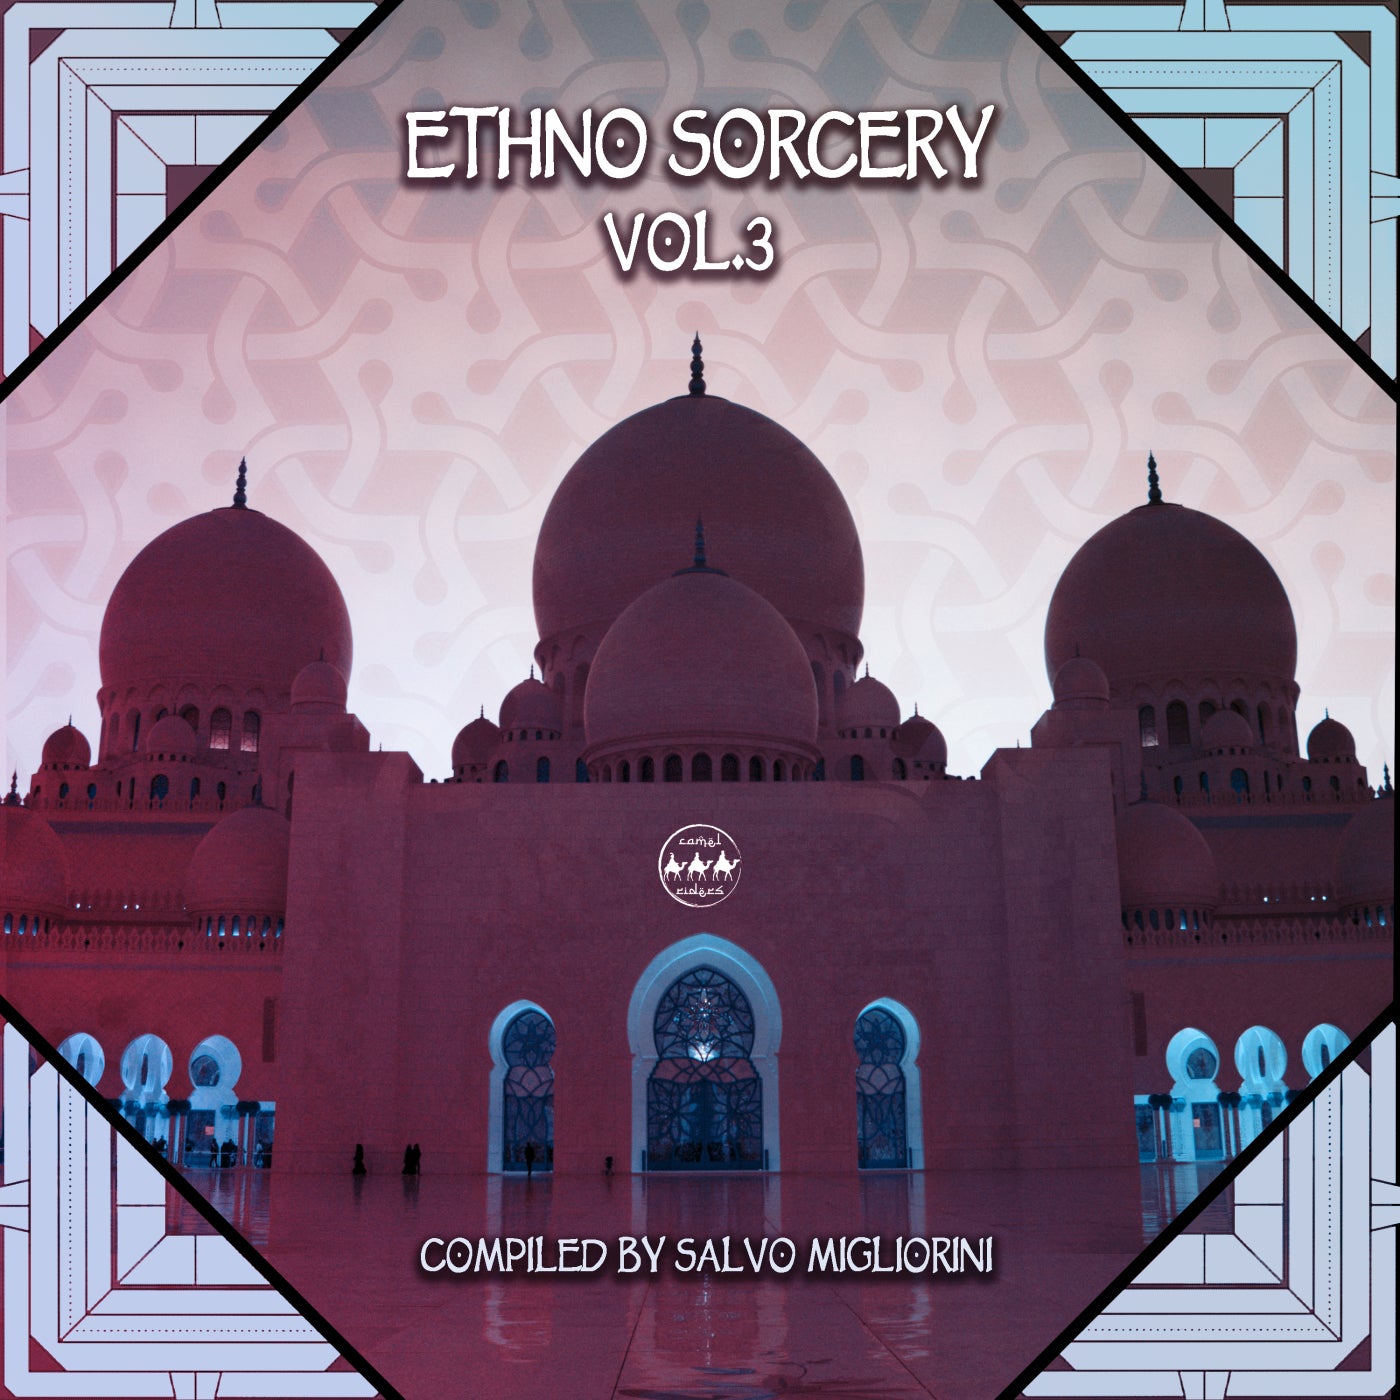 image cover: VA - Ethno Sorcery, Vol. 3 (Compiled by Salvo Migliorini) / CRR036